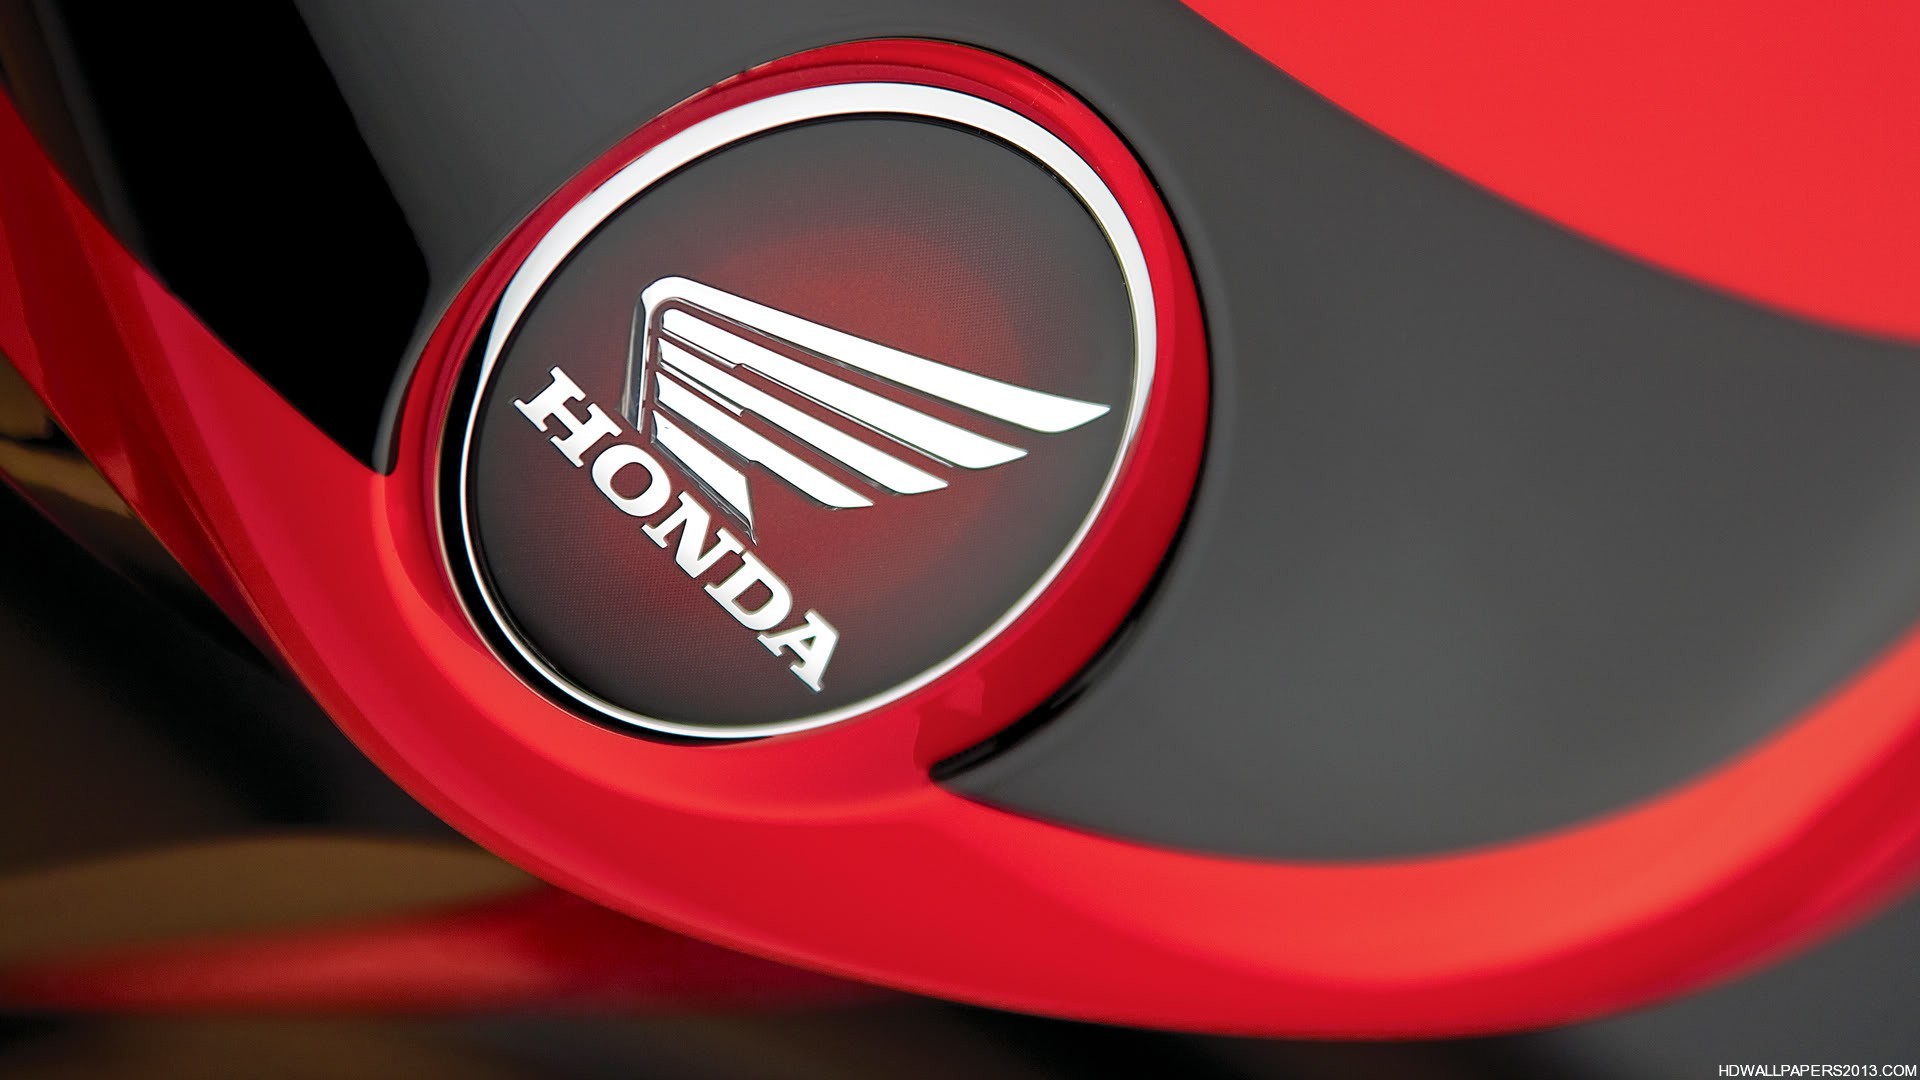 Honda motorcycle logo wallpaper